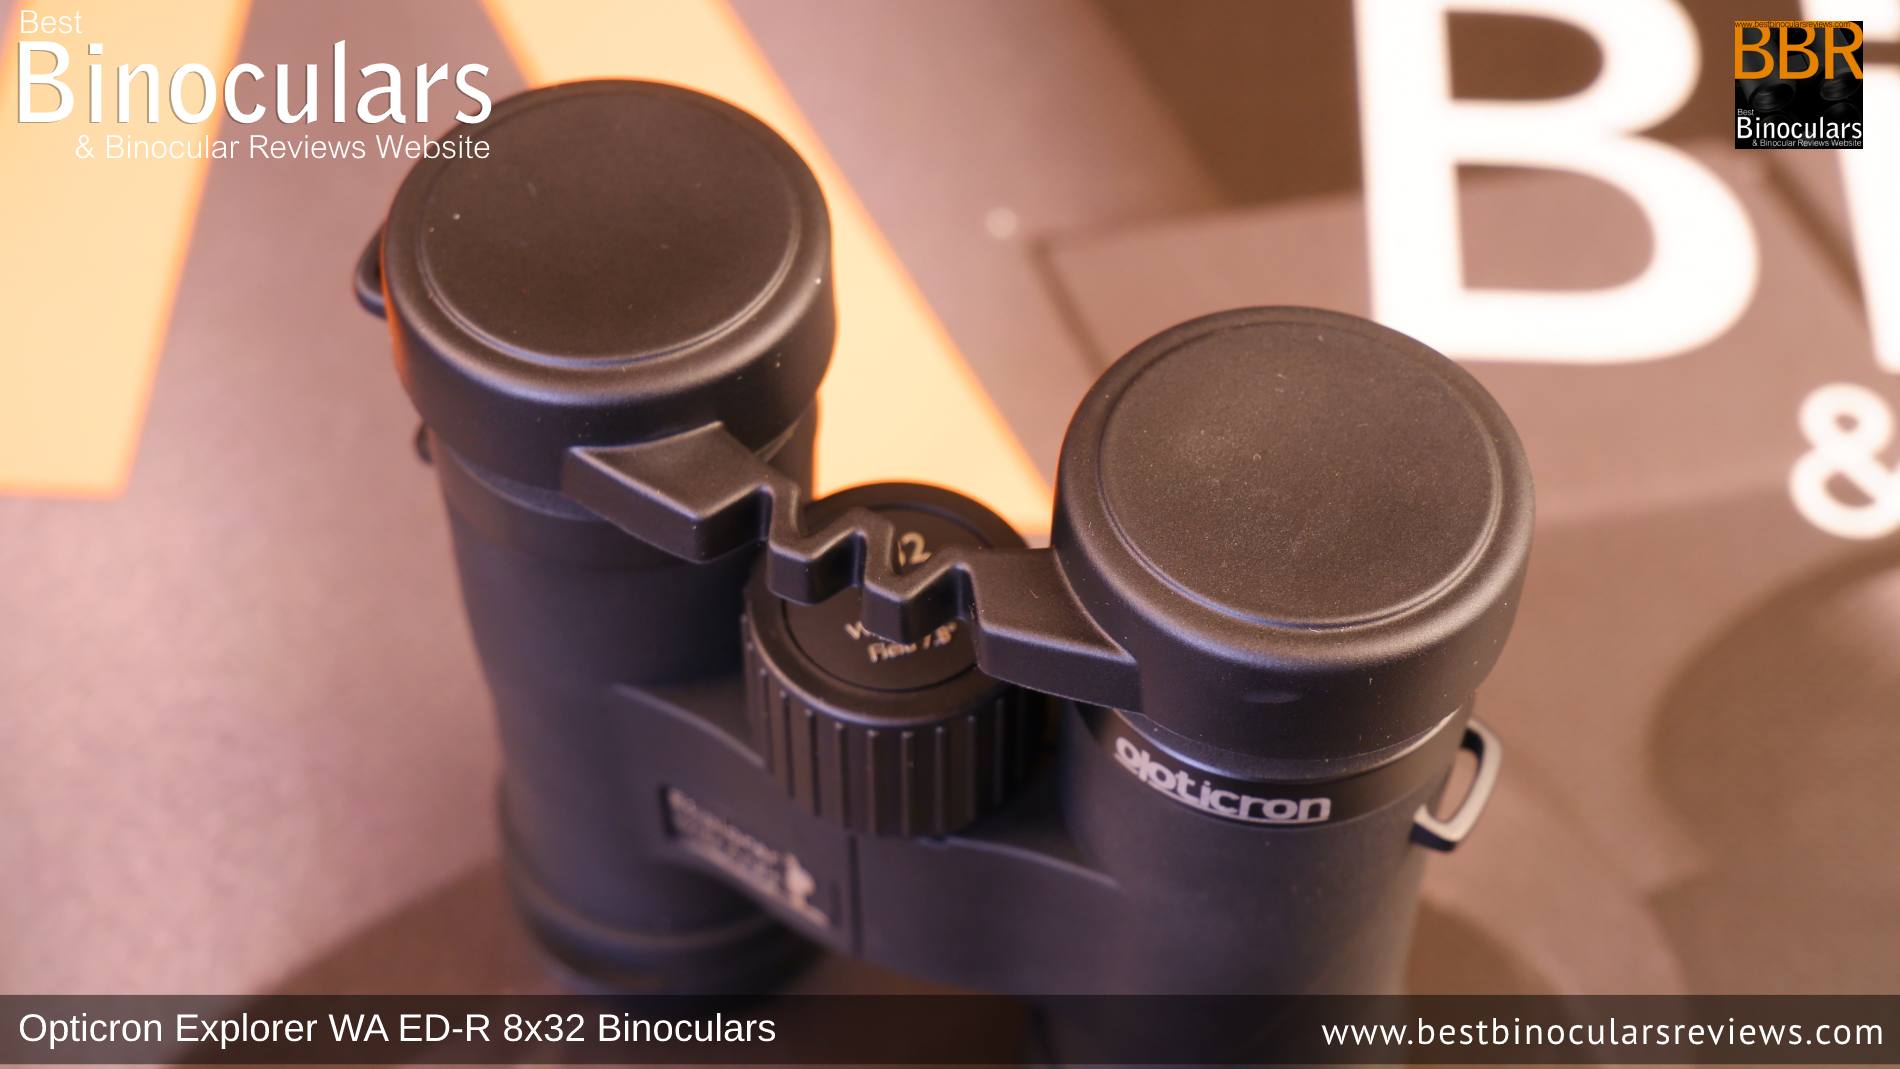 Opticron Explorer WA ED-R 8x32 Binoculars Review